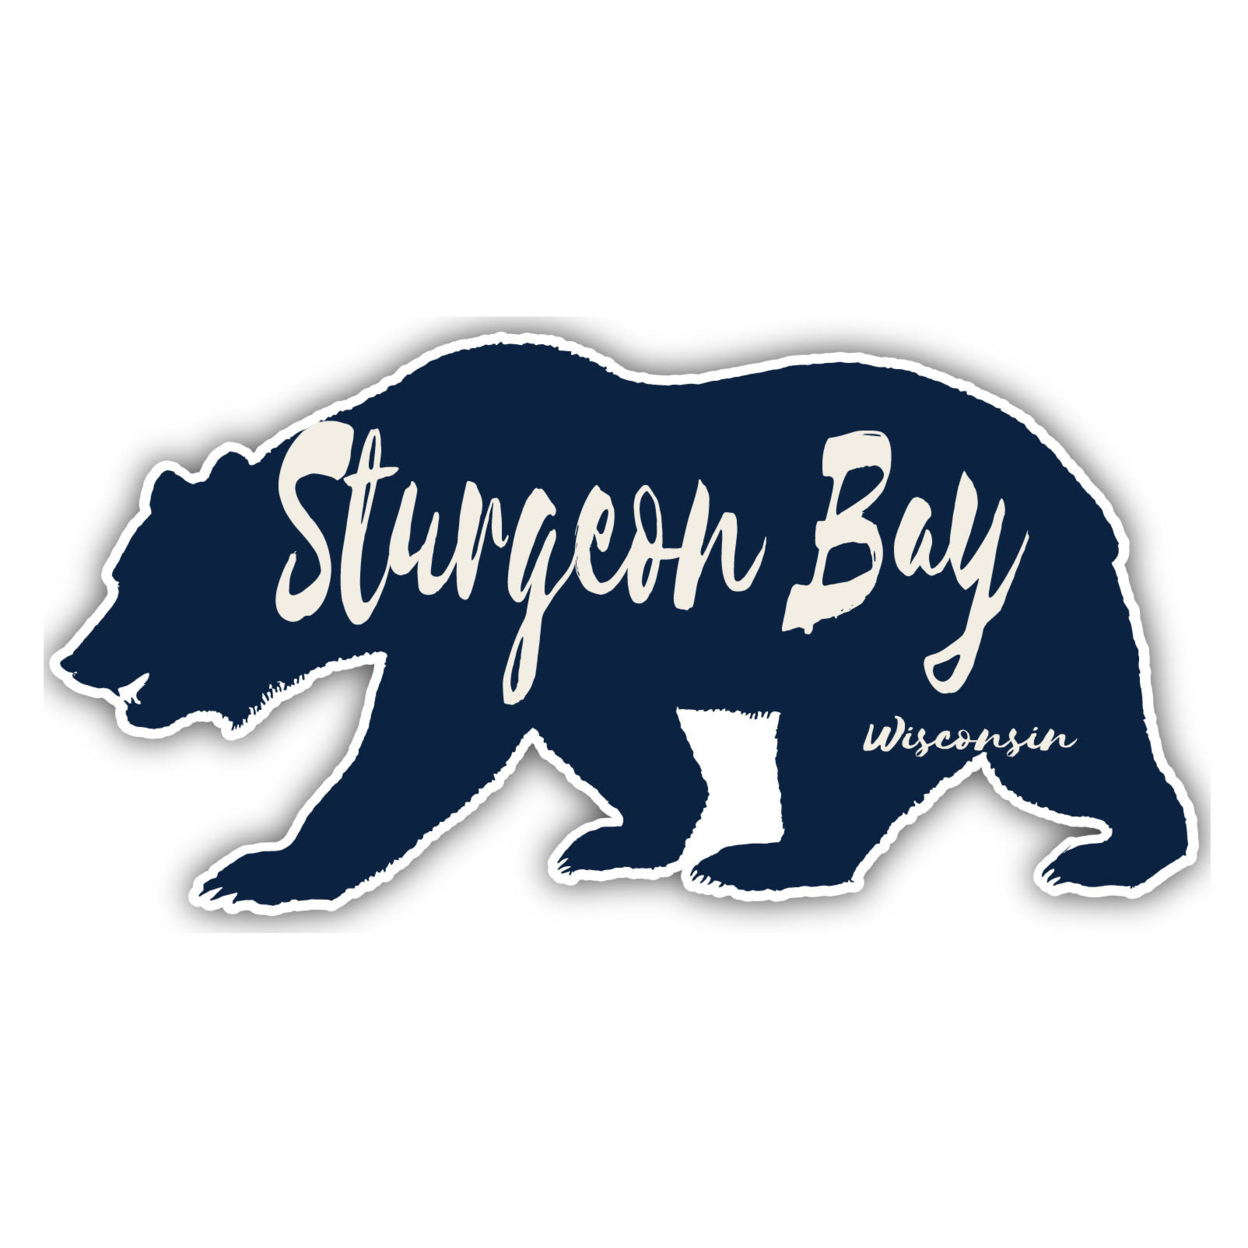 Sturgeon Bay Wisconsin Souvenir Decorative Stickers (Choose Theme And Size) - Single Unit, 4-Inch, Tent